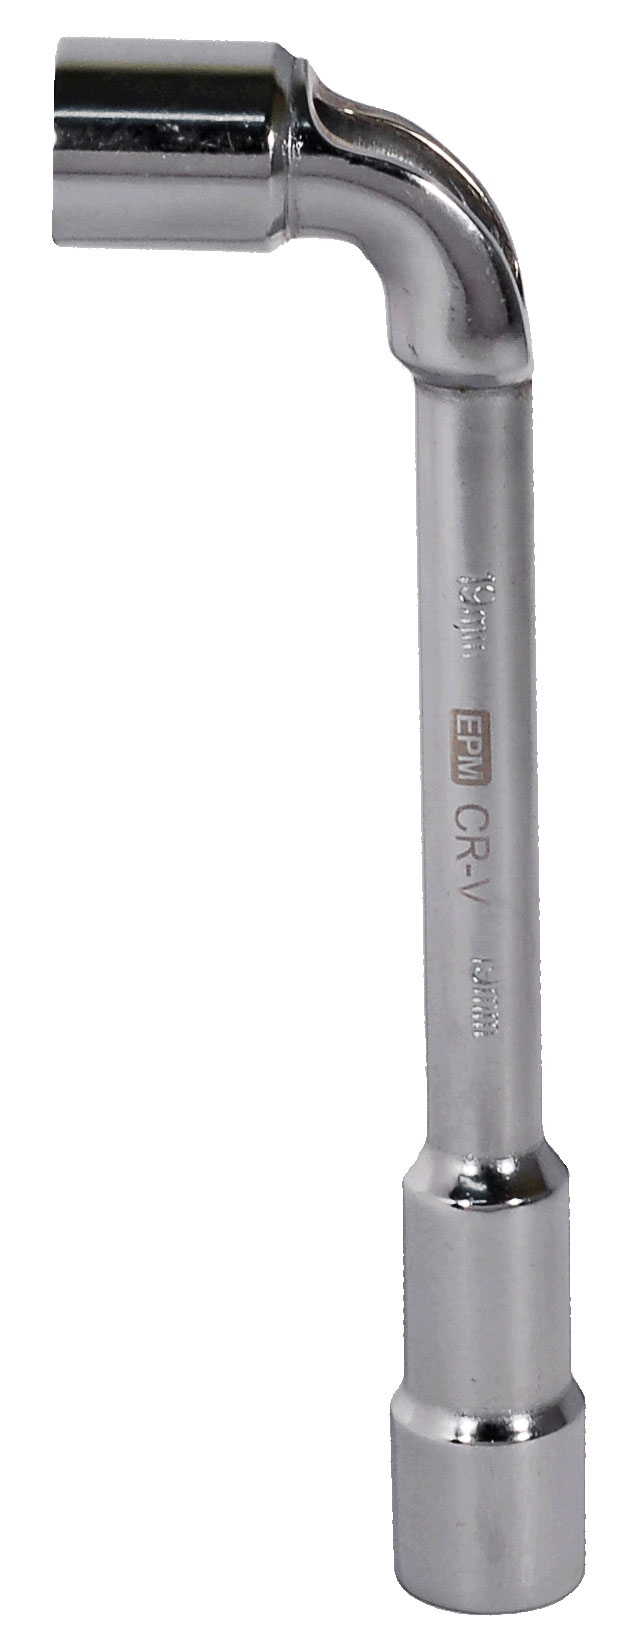 EPM L-type socket wrench 19mm (E-400-3519)